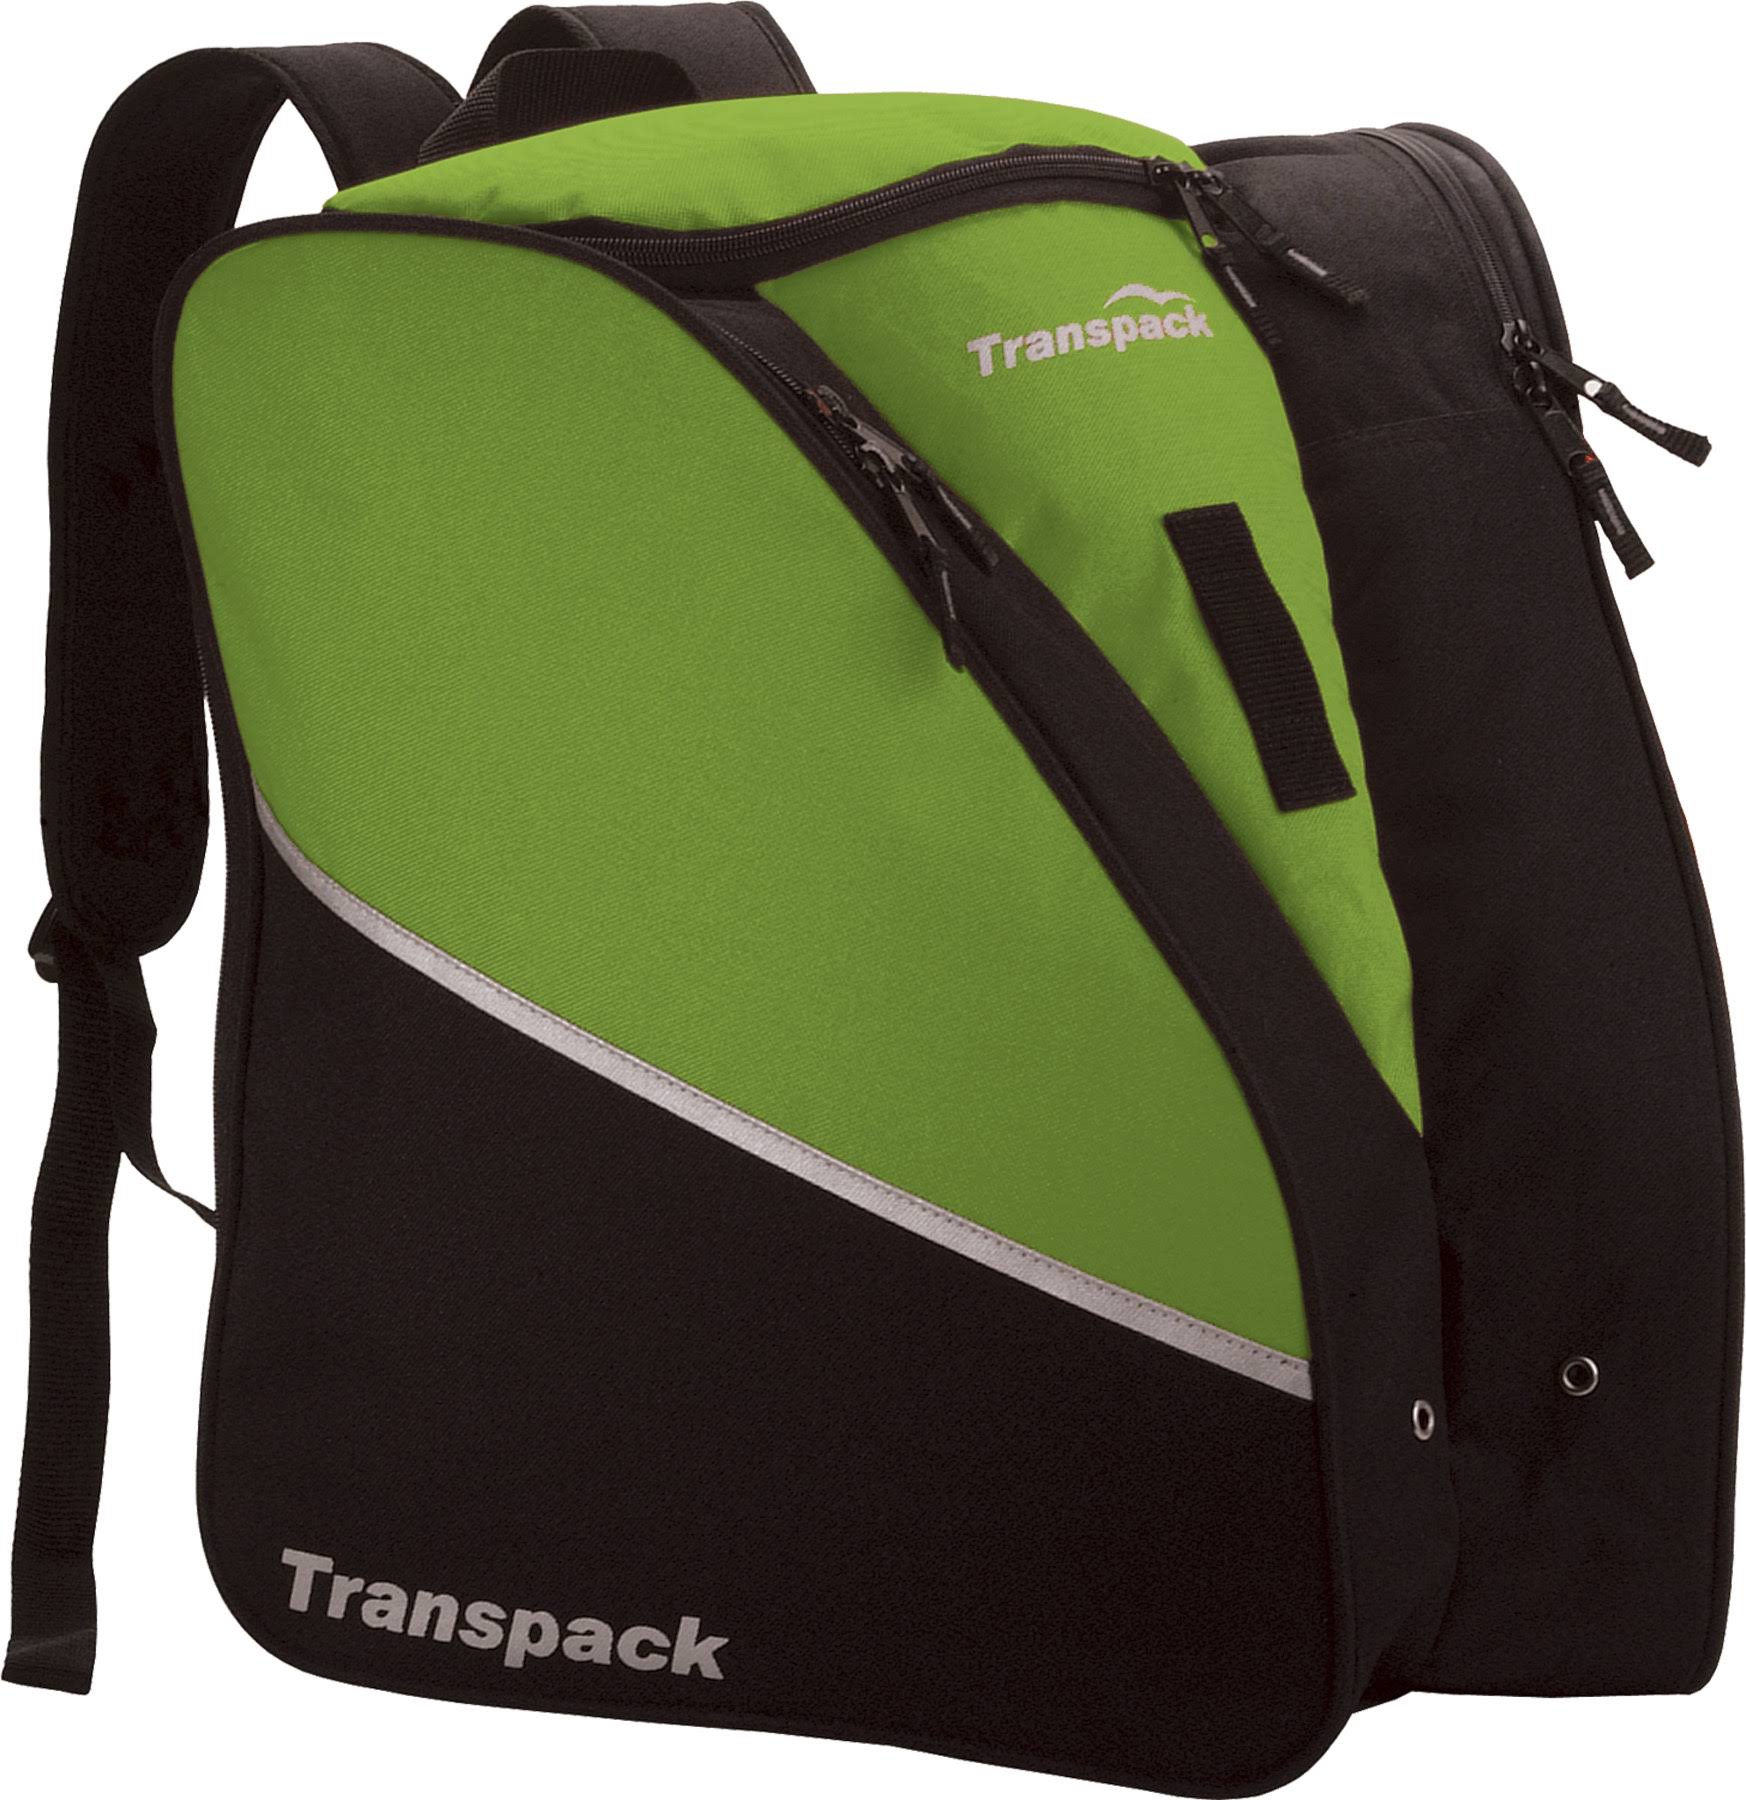 Transpack Edge Jr. Boot Bag - Lime